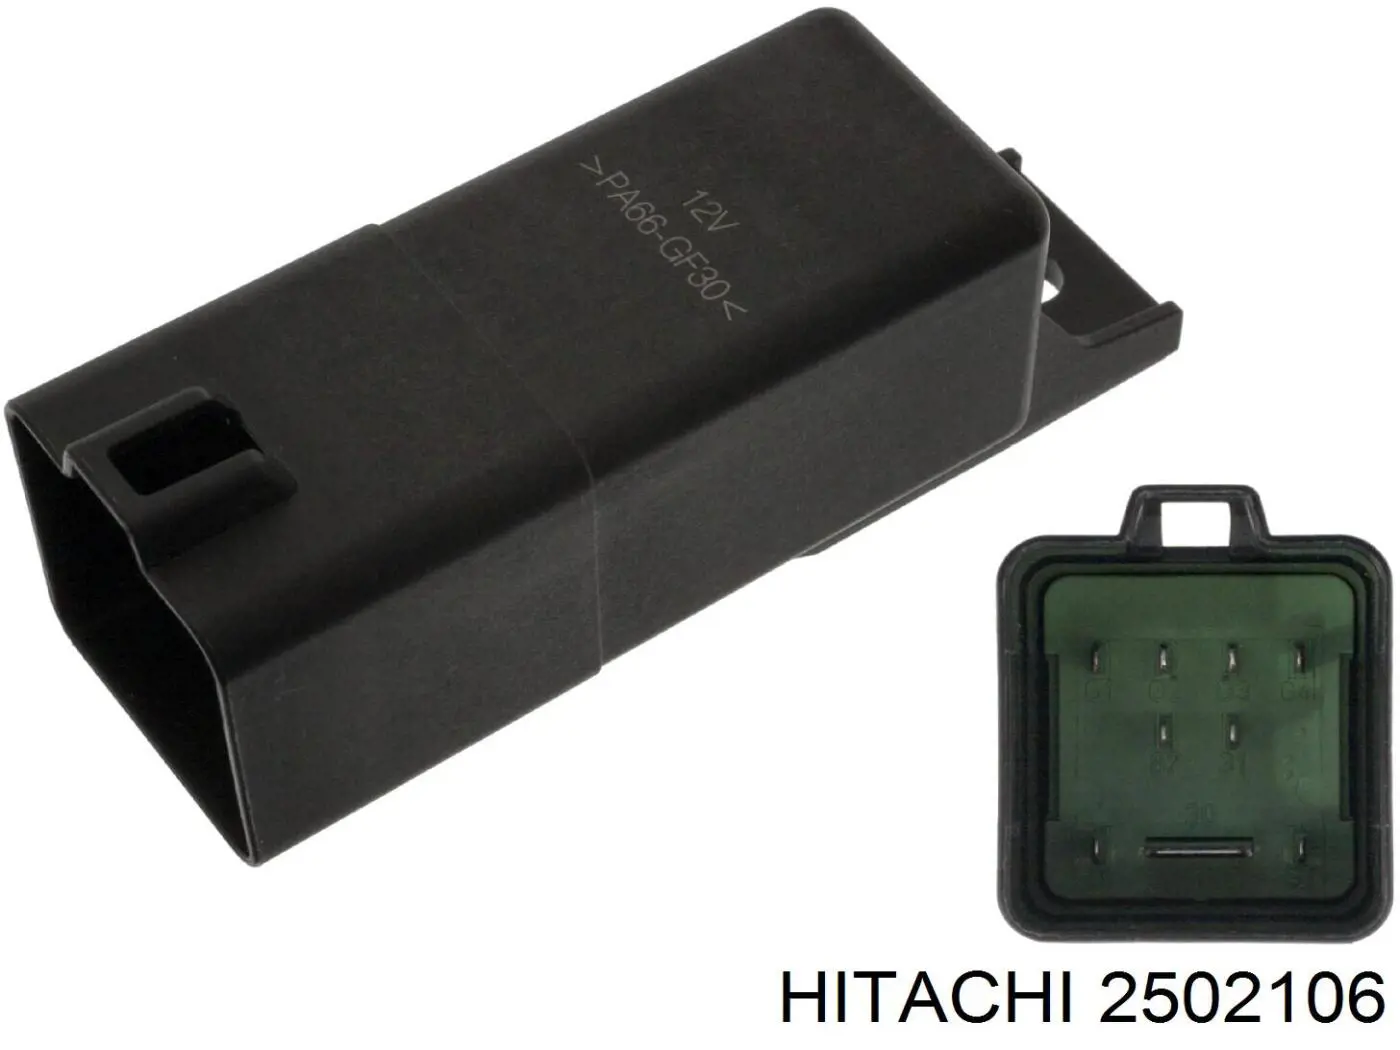 2502106 Hitachi relé de precalentamiento